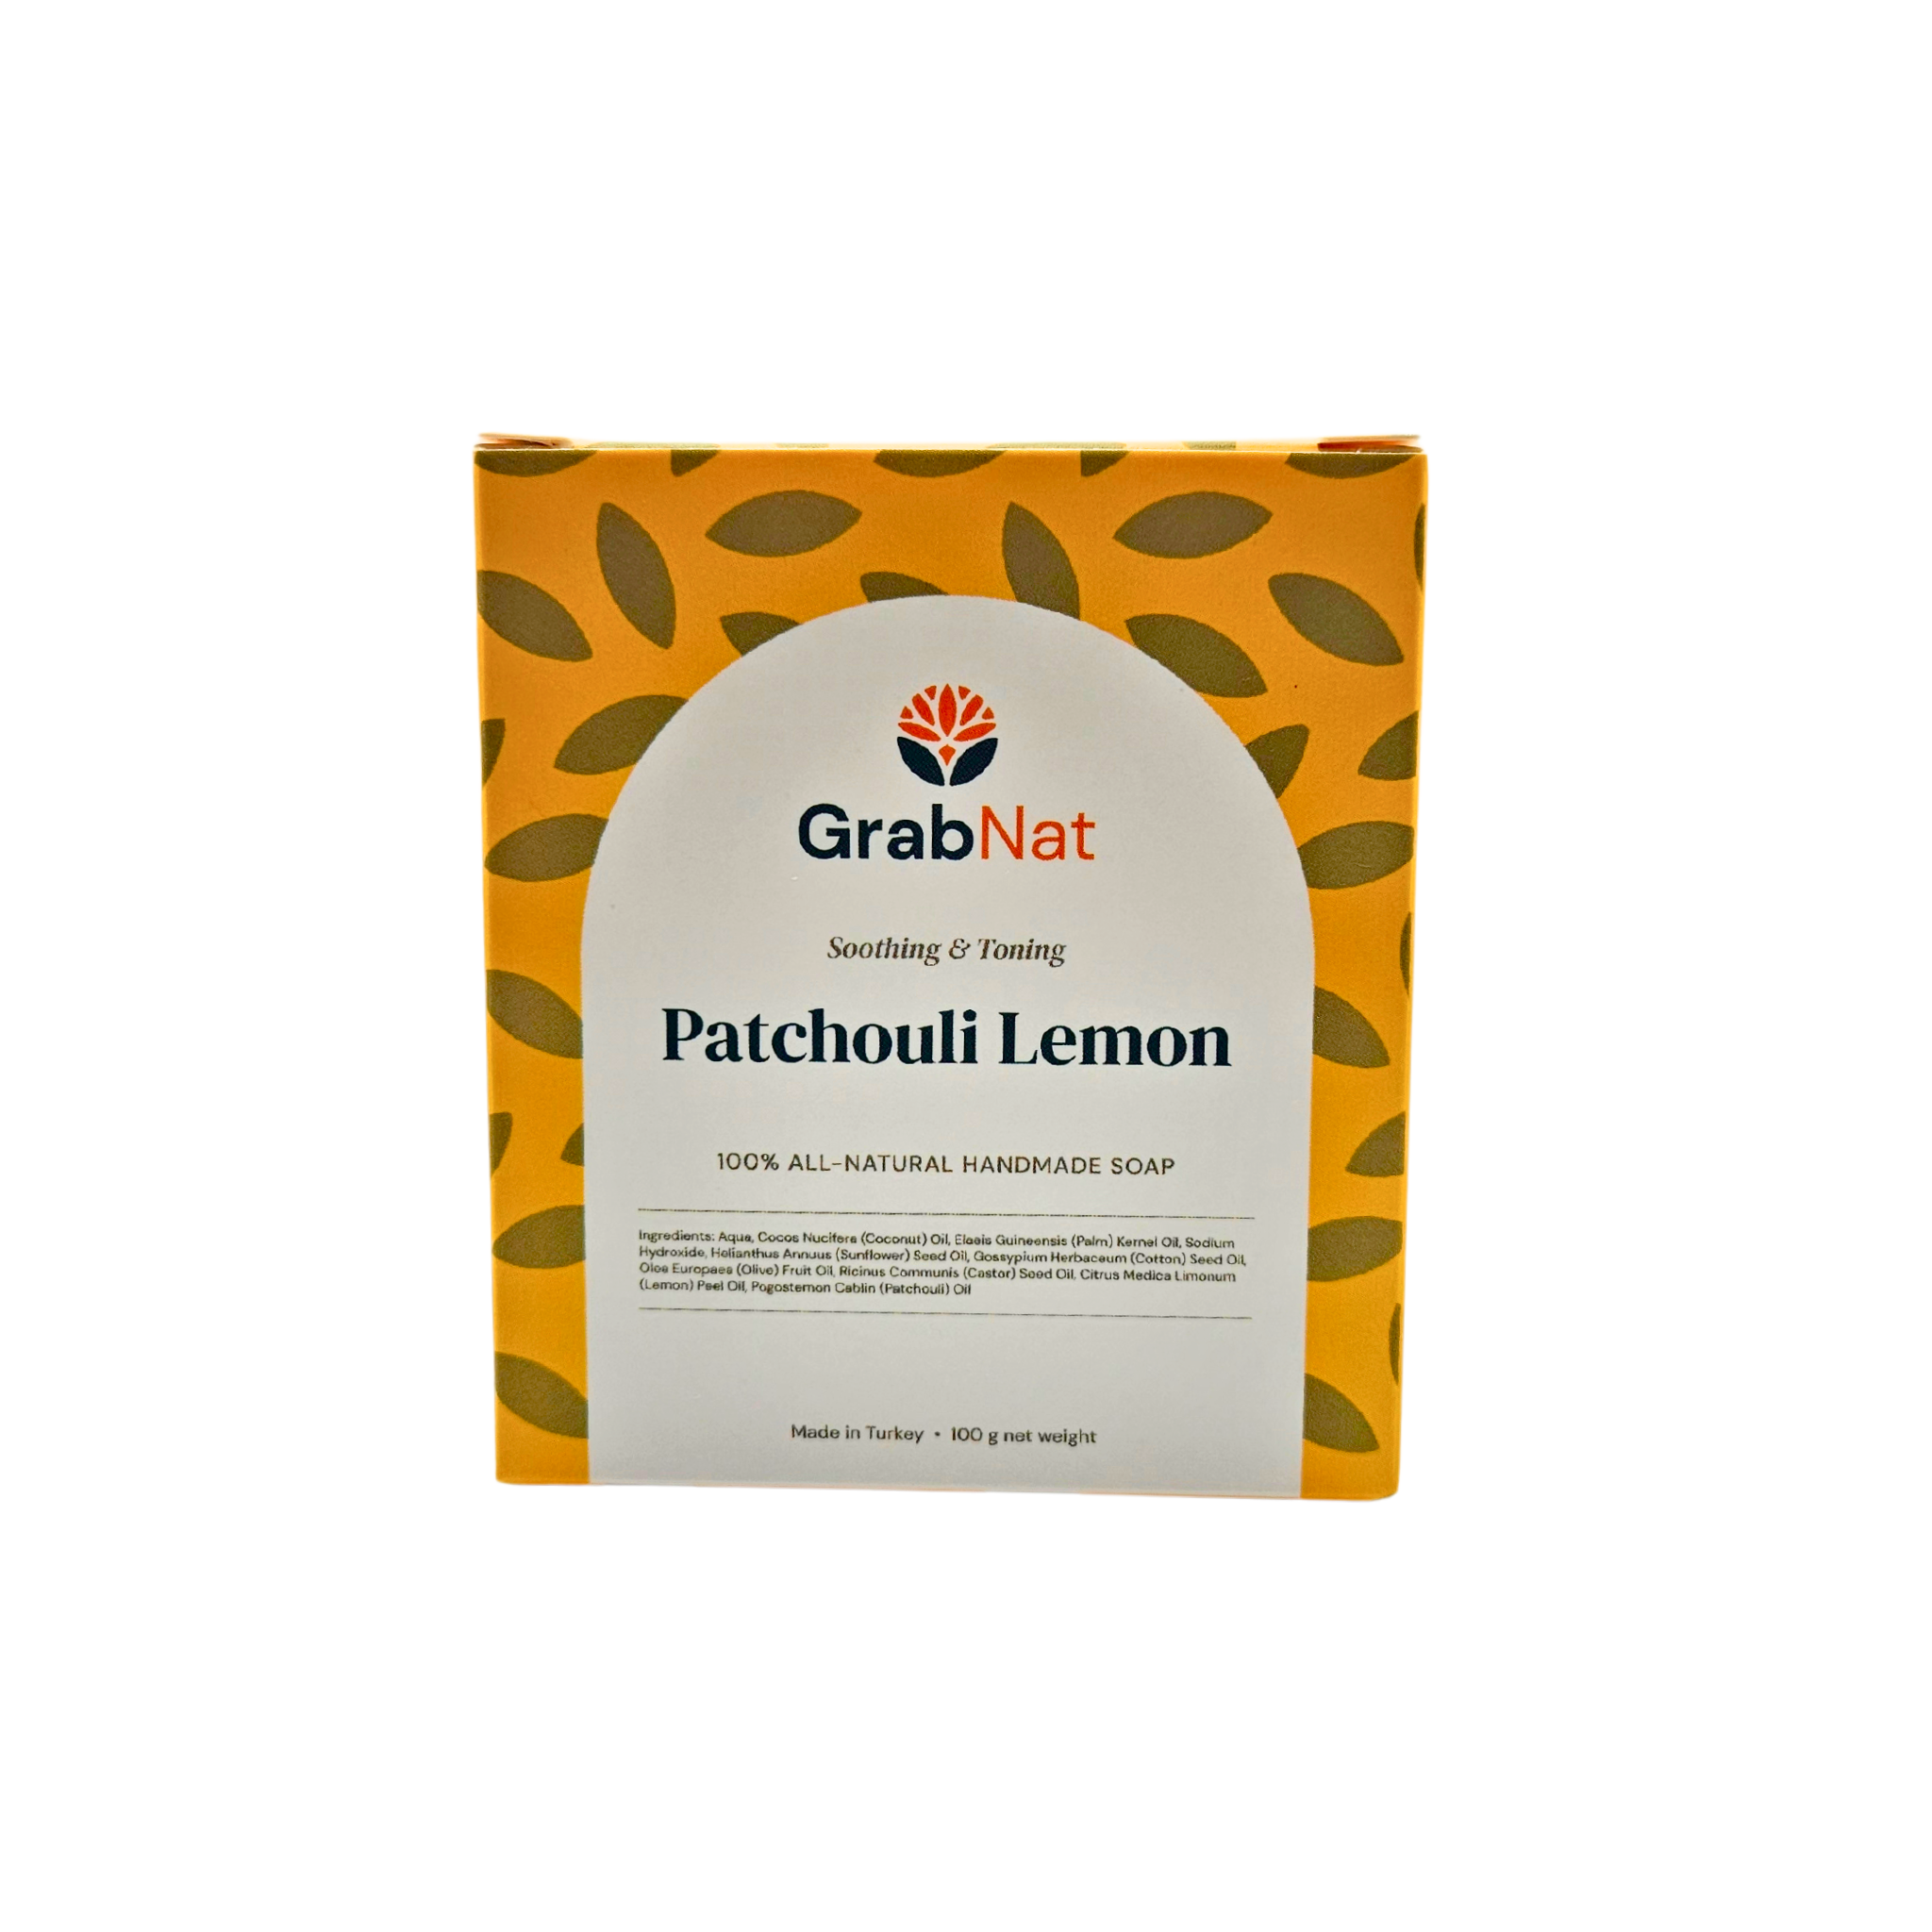 Citrus Sunrise Sensitive Dry Skin Variety Pack (5 pack): Lemon, Cinnamon Orange, Patchouli Lemon, Grape Seed, Calendula